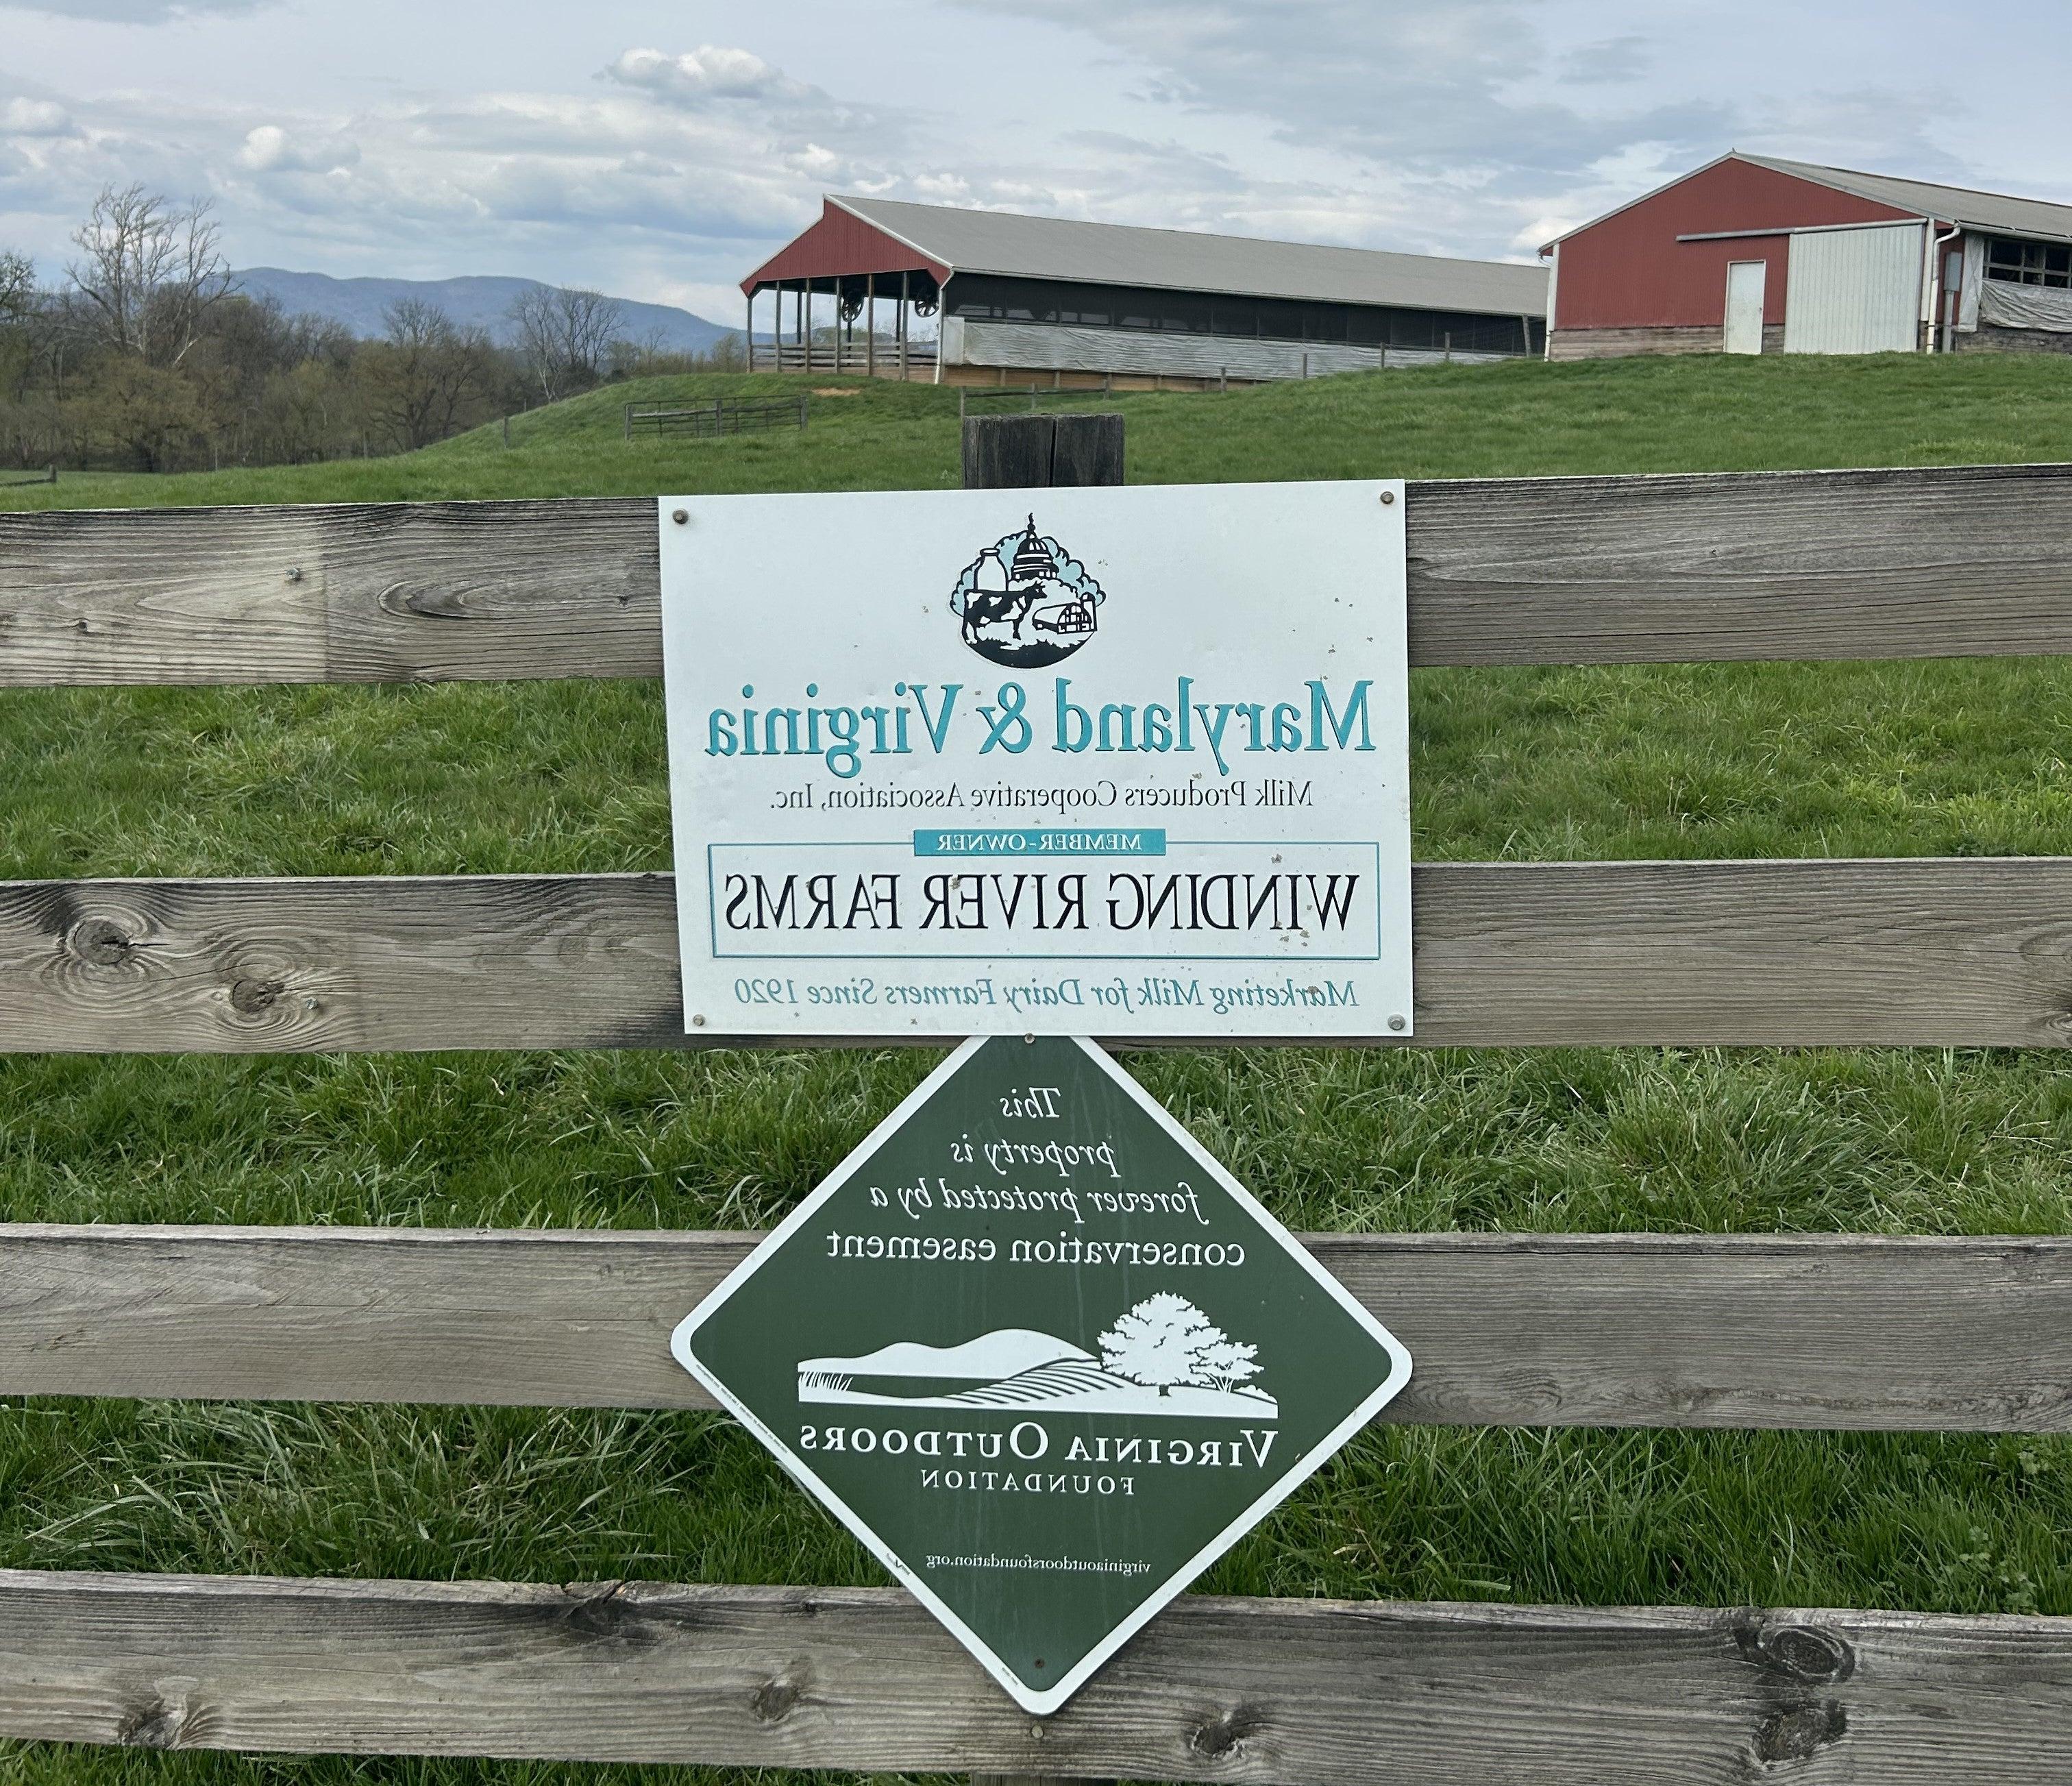 Winding River Farm conservation easement